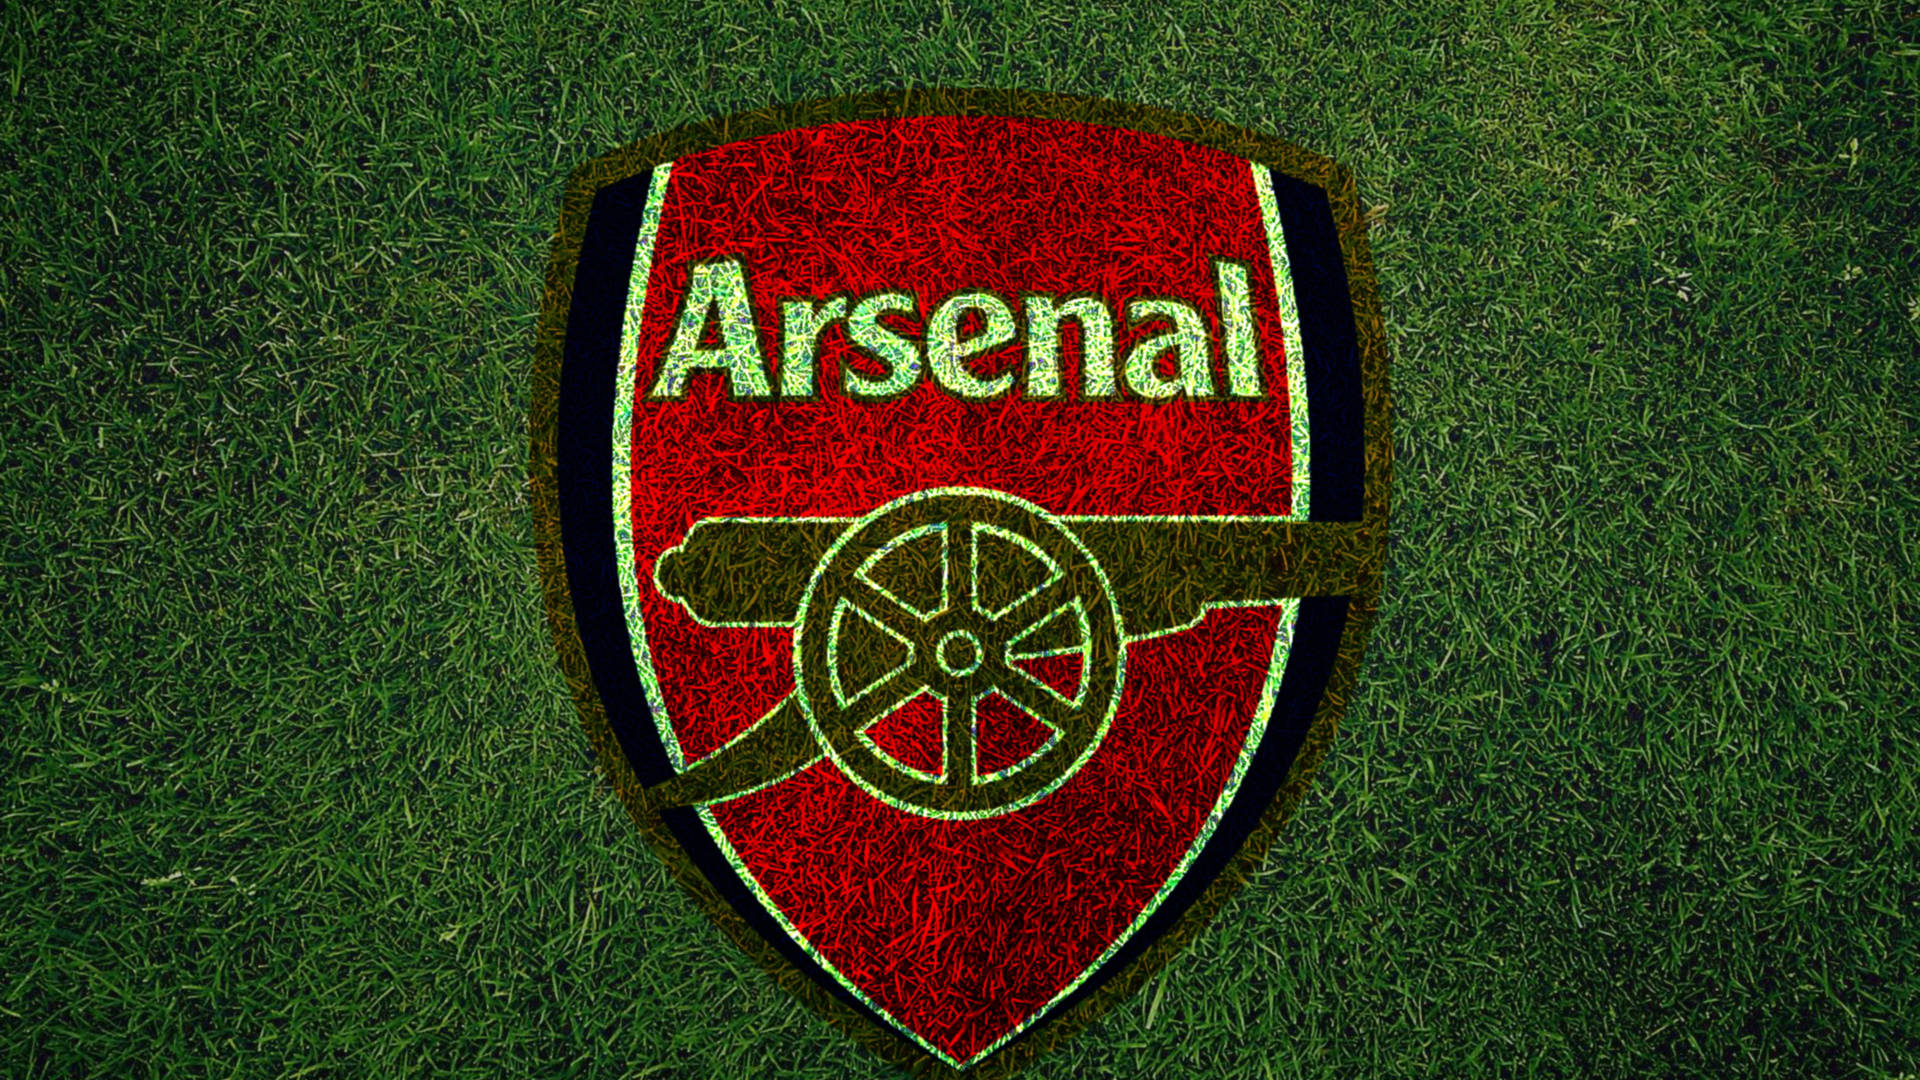 Arsenal Logo On Grass Field Background